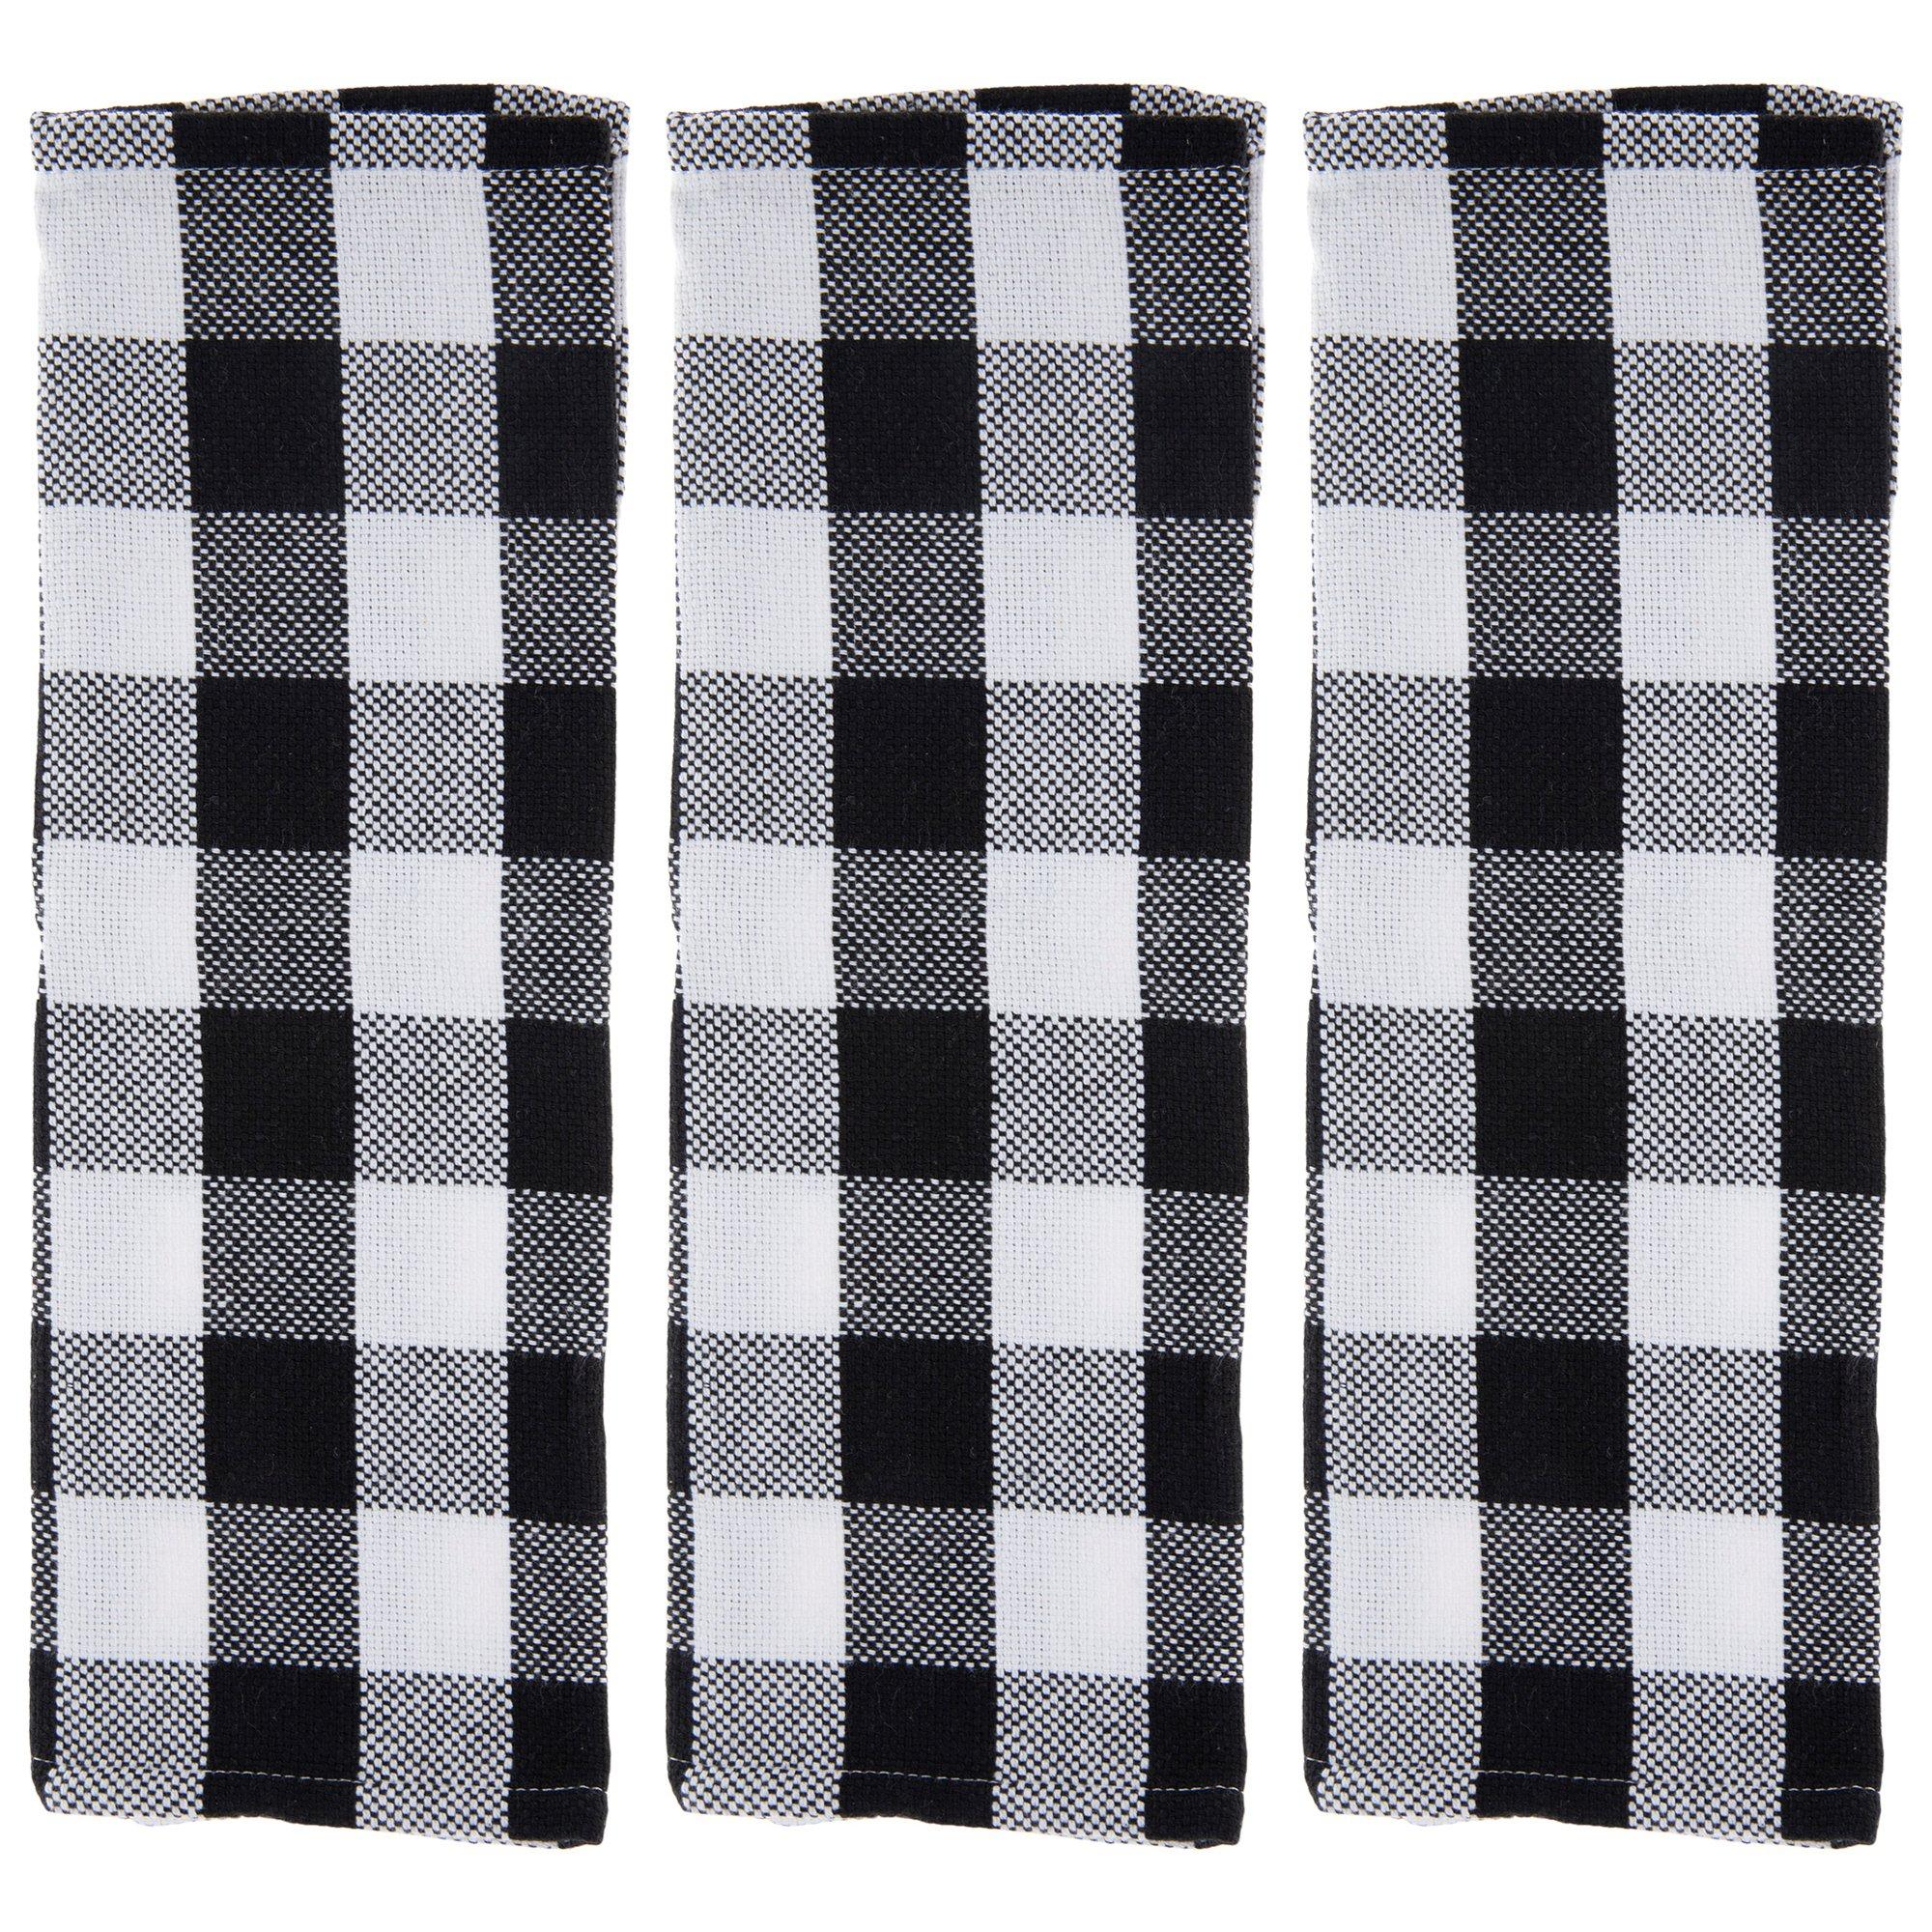 4 Pieces Buffalo Plaid Kitchen Towels Black White Plaid Towels Home Family